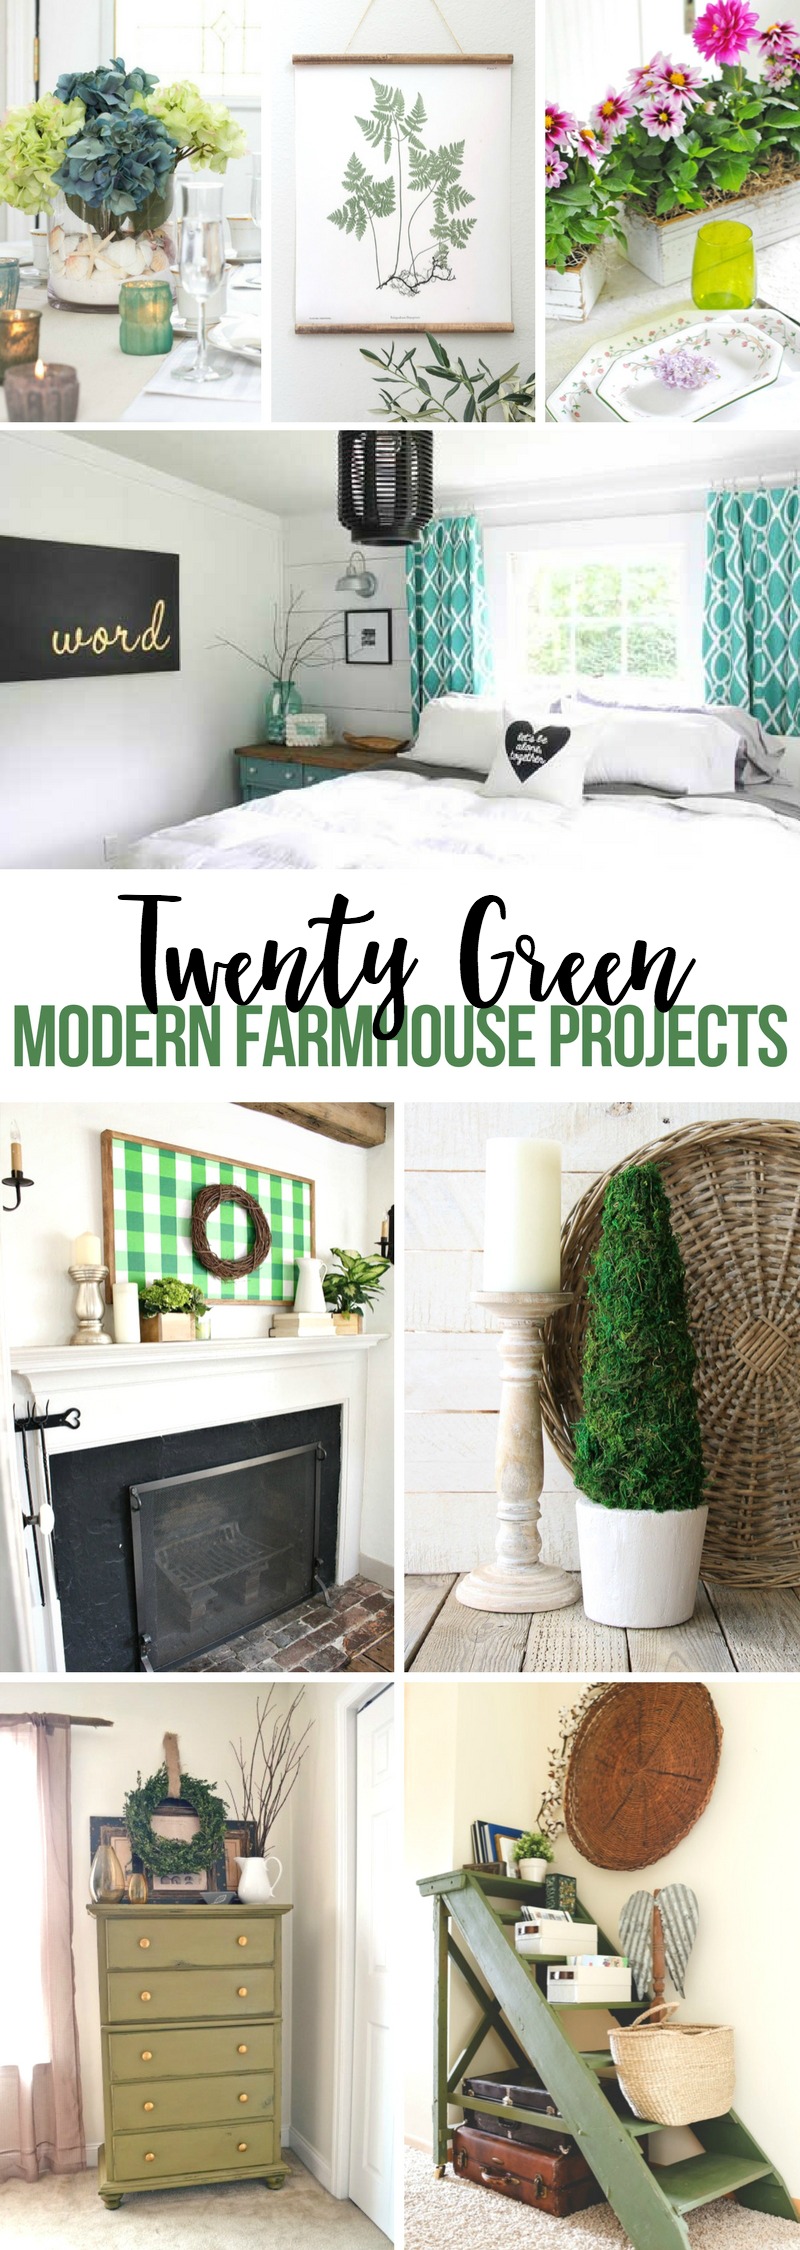 Green Modern Farmhouse Projects